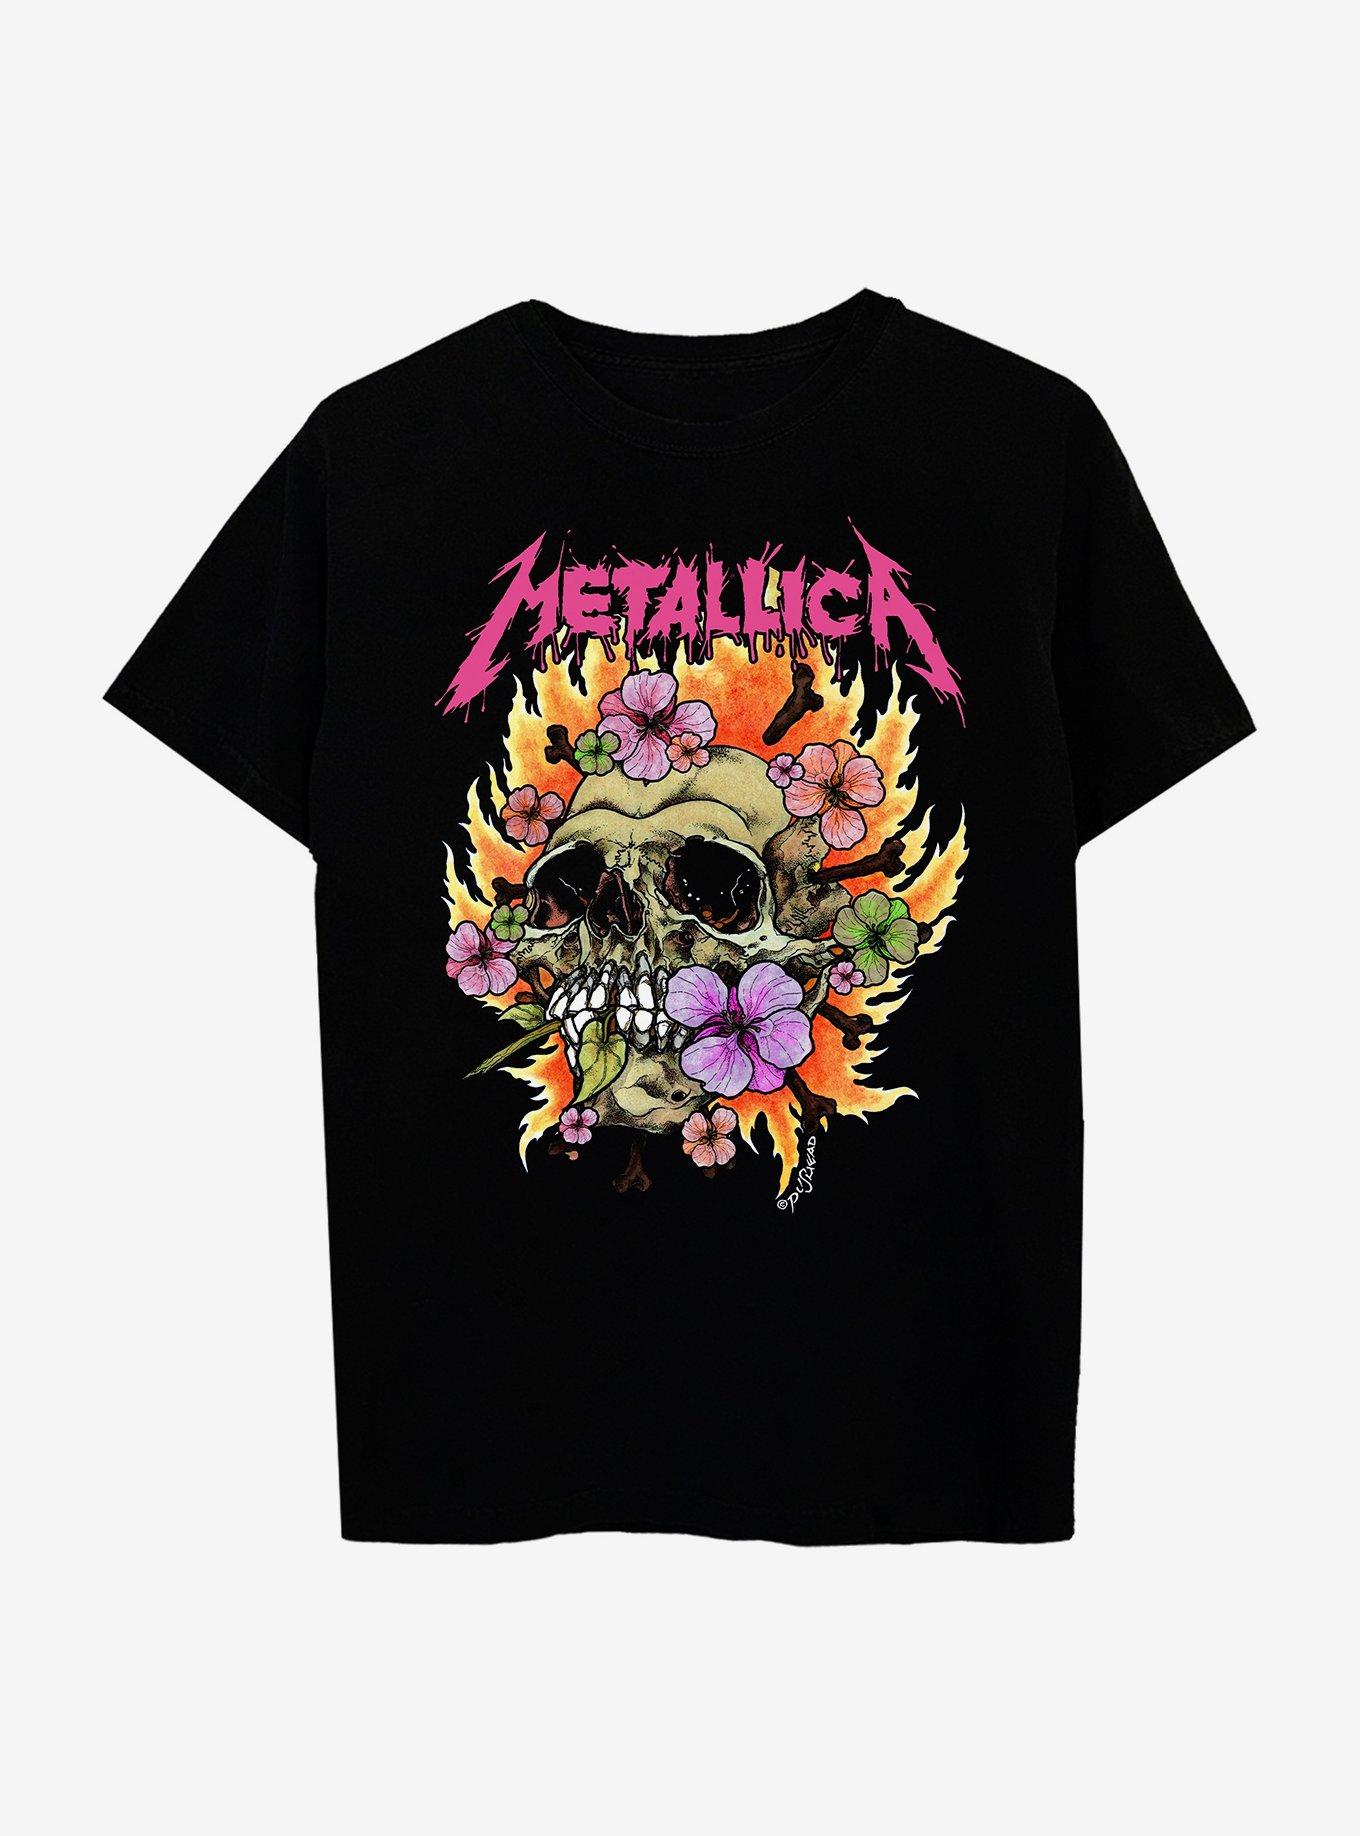 Metallica Skull York Yankees T-Shirt, Tshirt, Hoodie, Sweatshirt, Long  Sleeve, Youth, funny shirts, gift shirts, Graphic Tee » Cool Gifts for You  - Mfamilygift